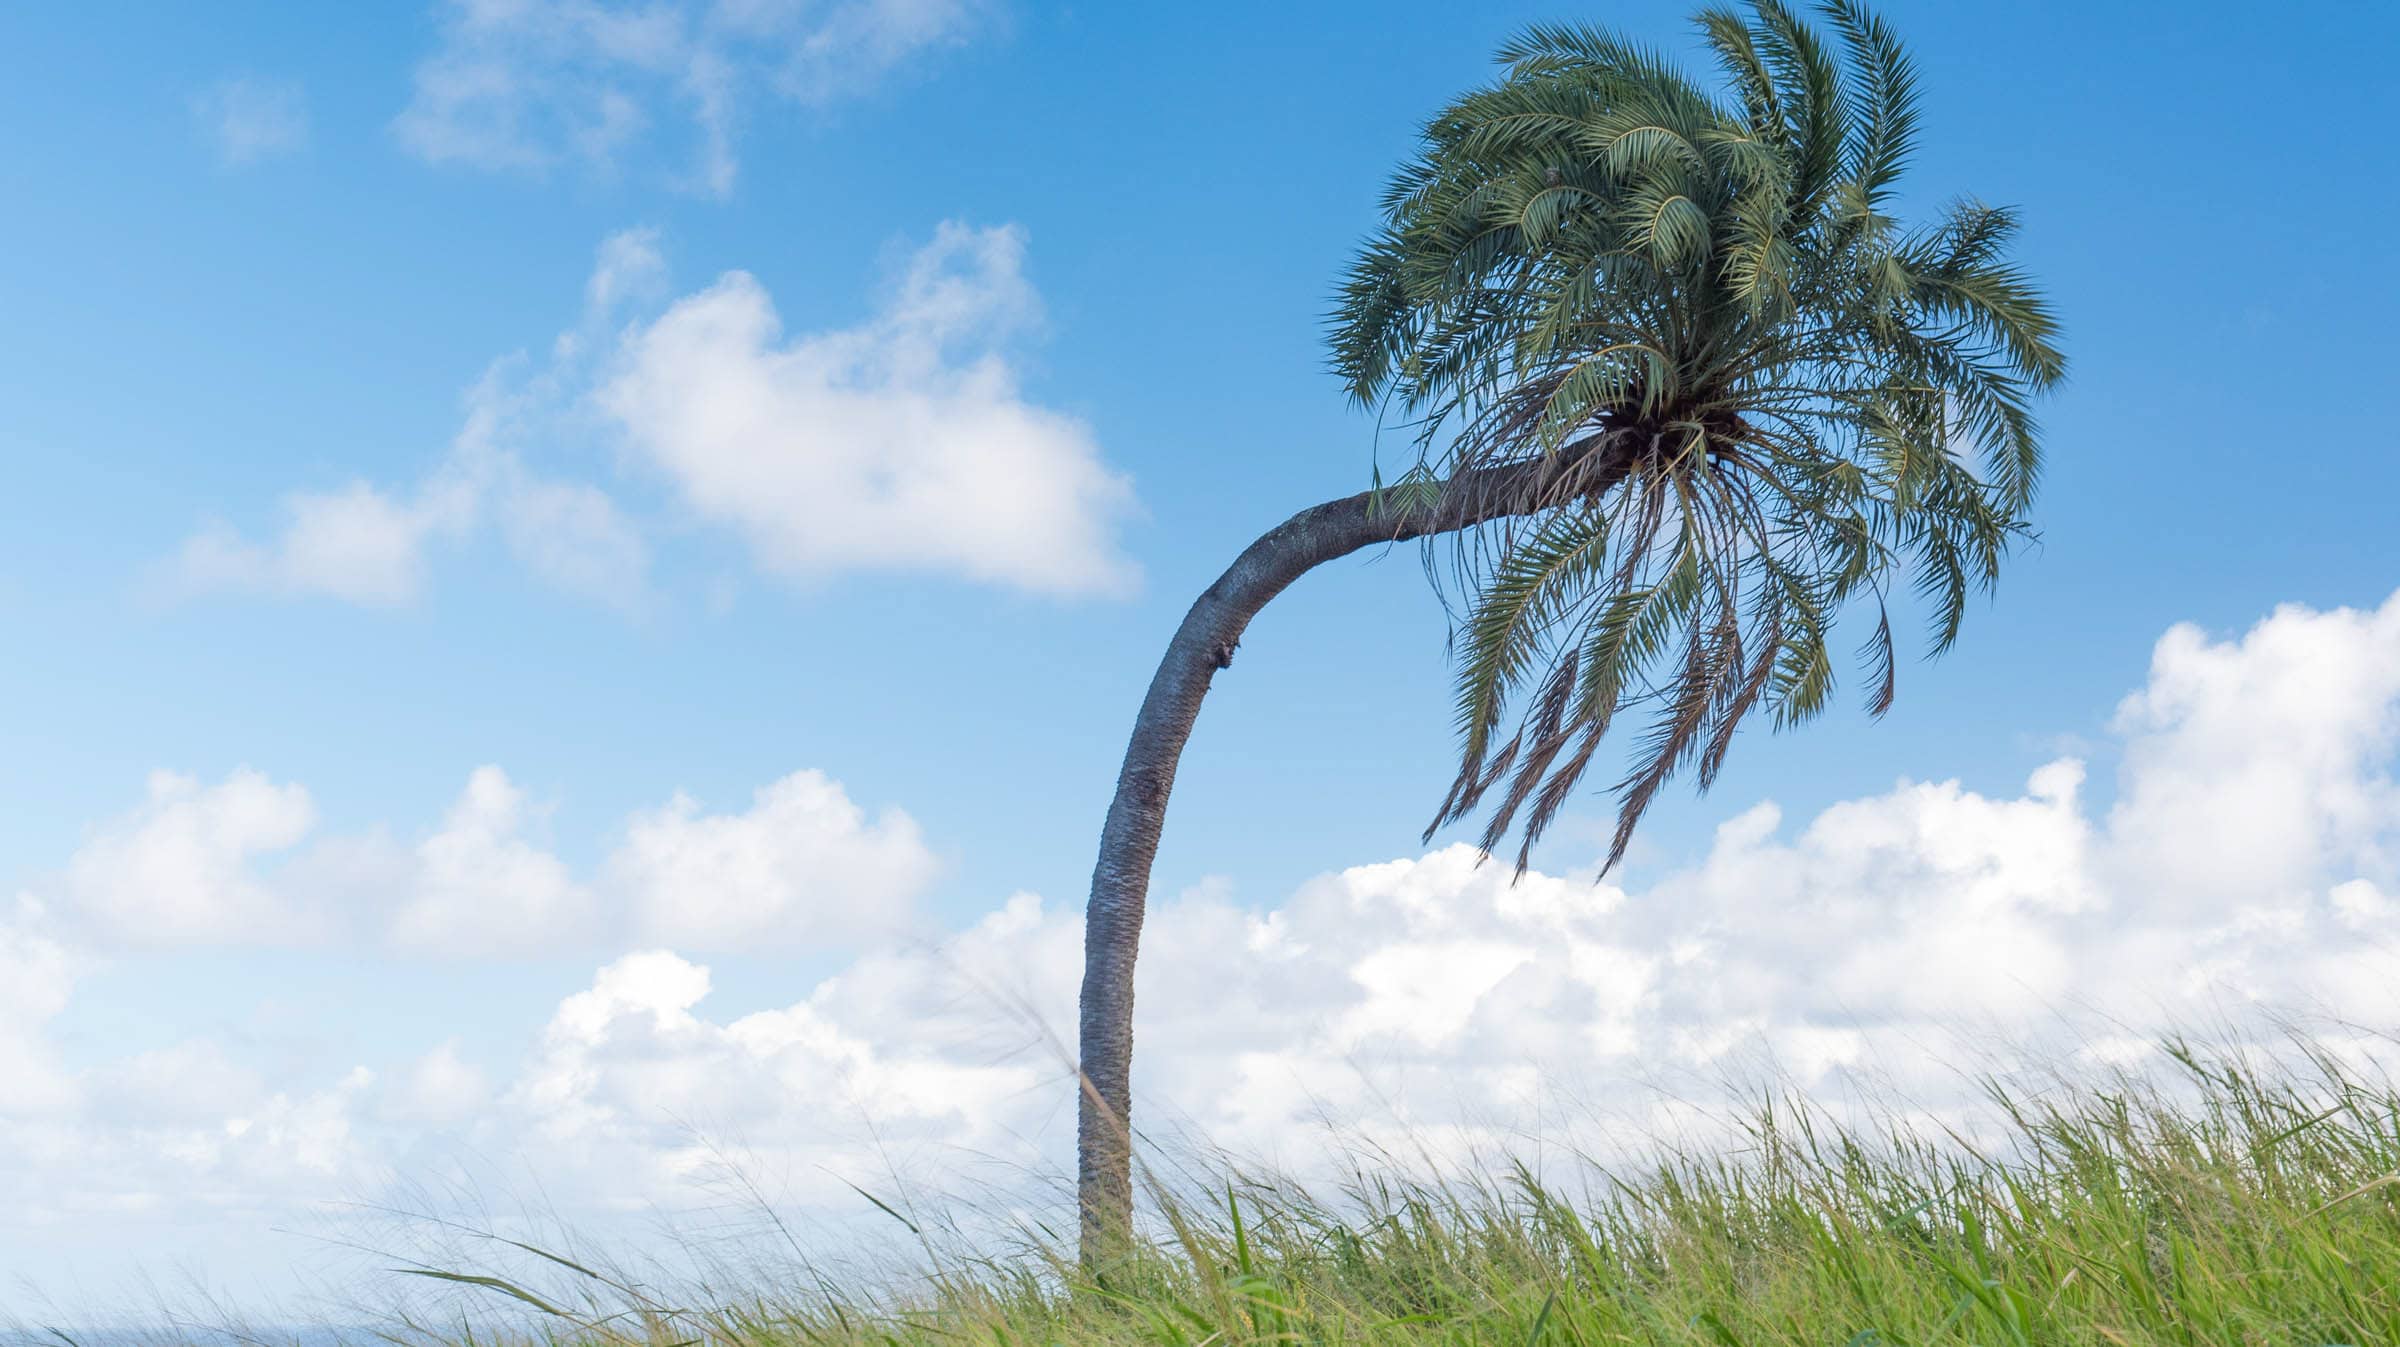 Bent Palm at Belle Mont Farm, St. Kitts | Credit: Patrick Bennett